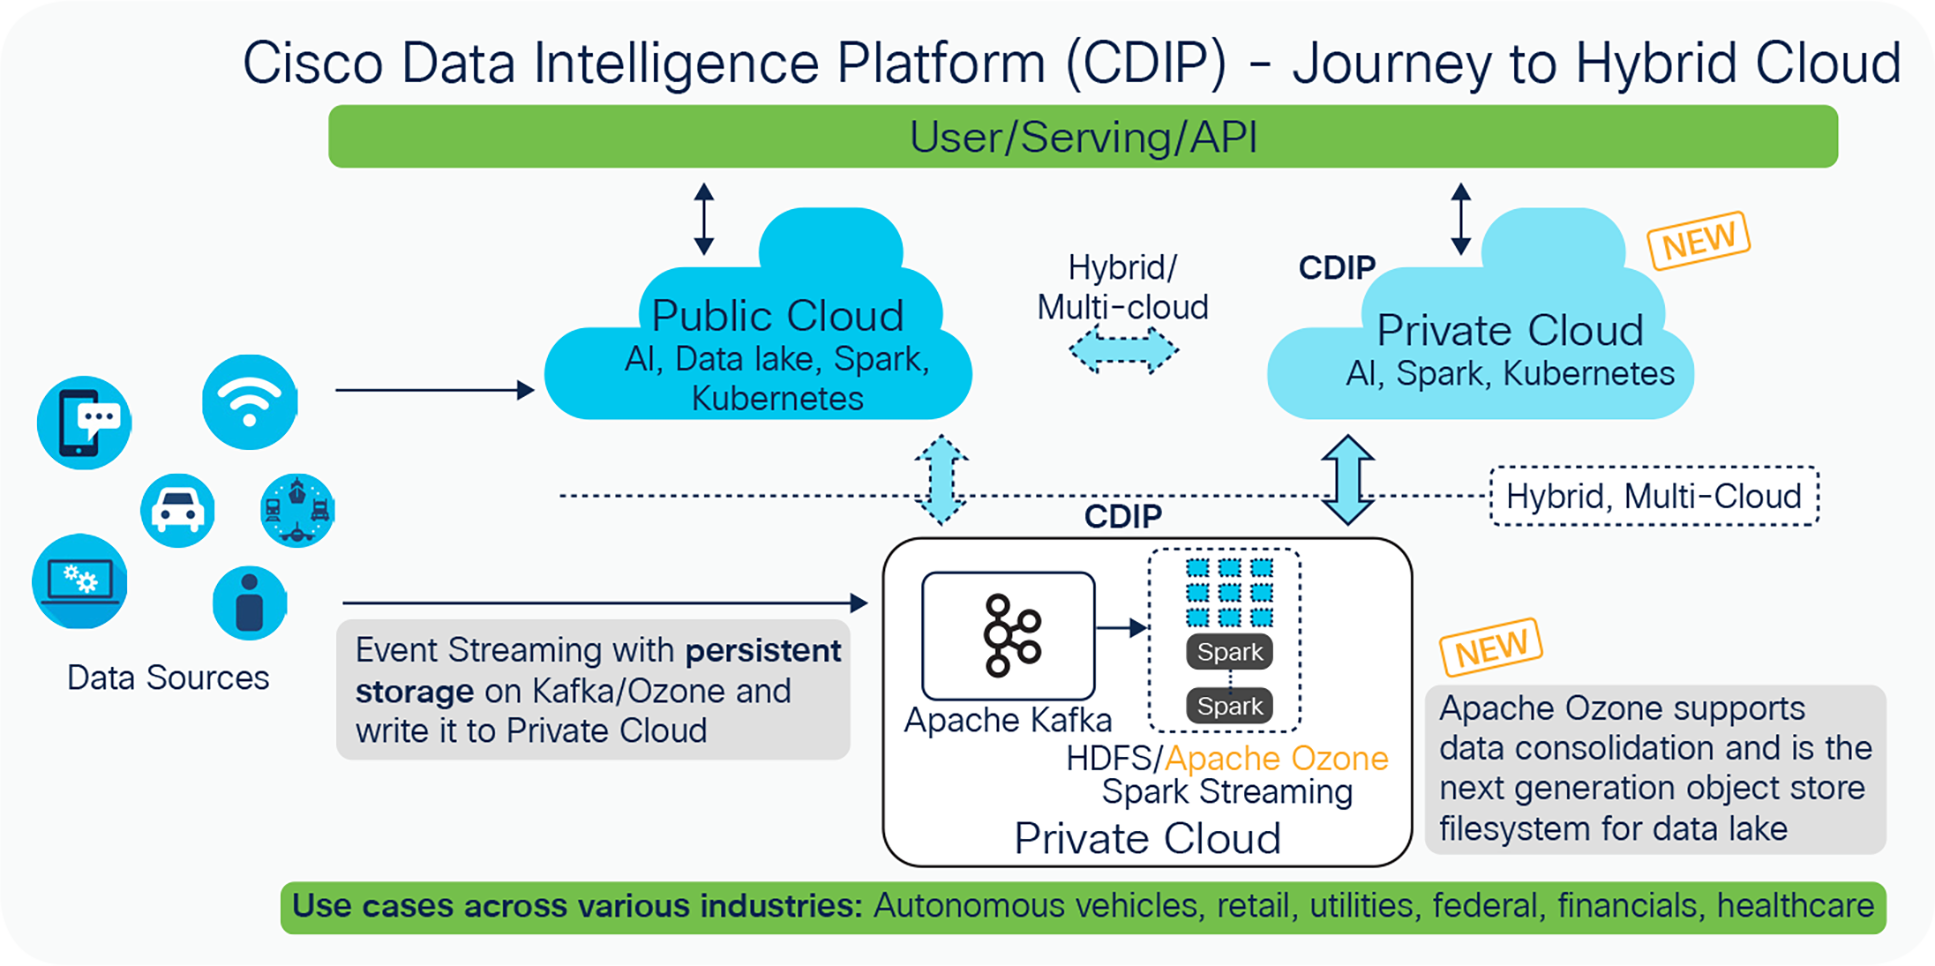 Cisco Data Intelligence Platform architecture